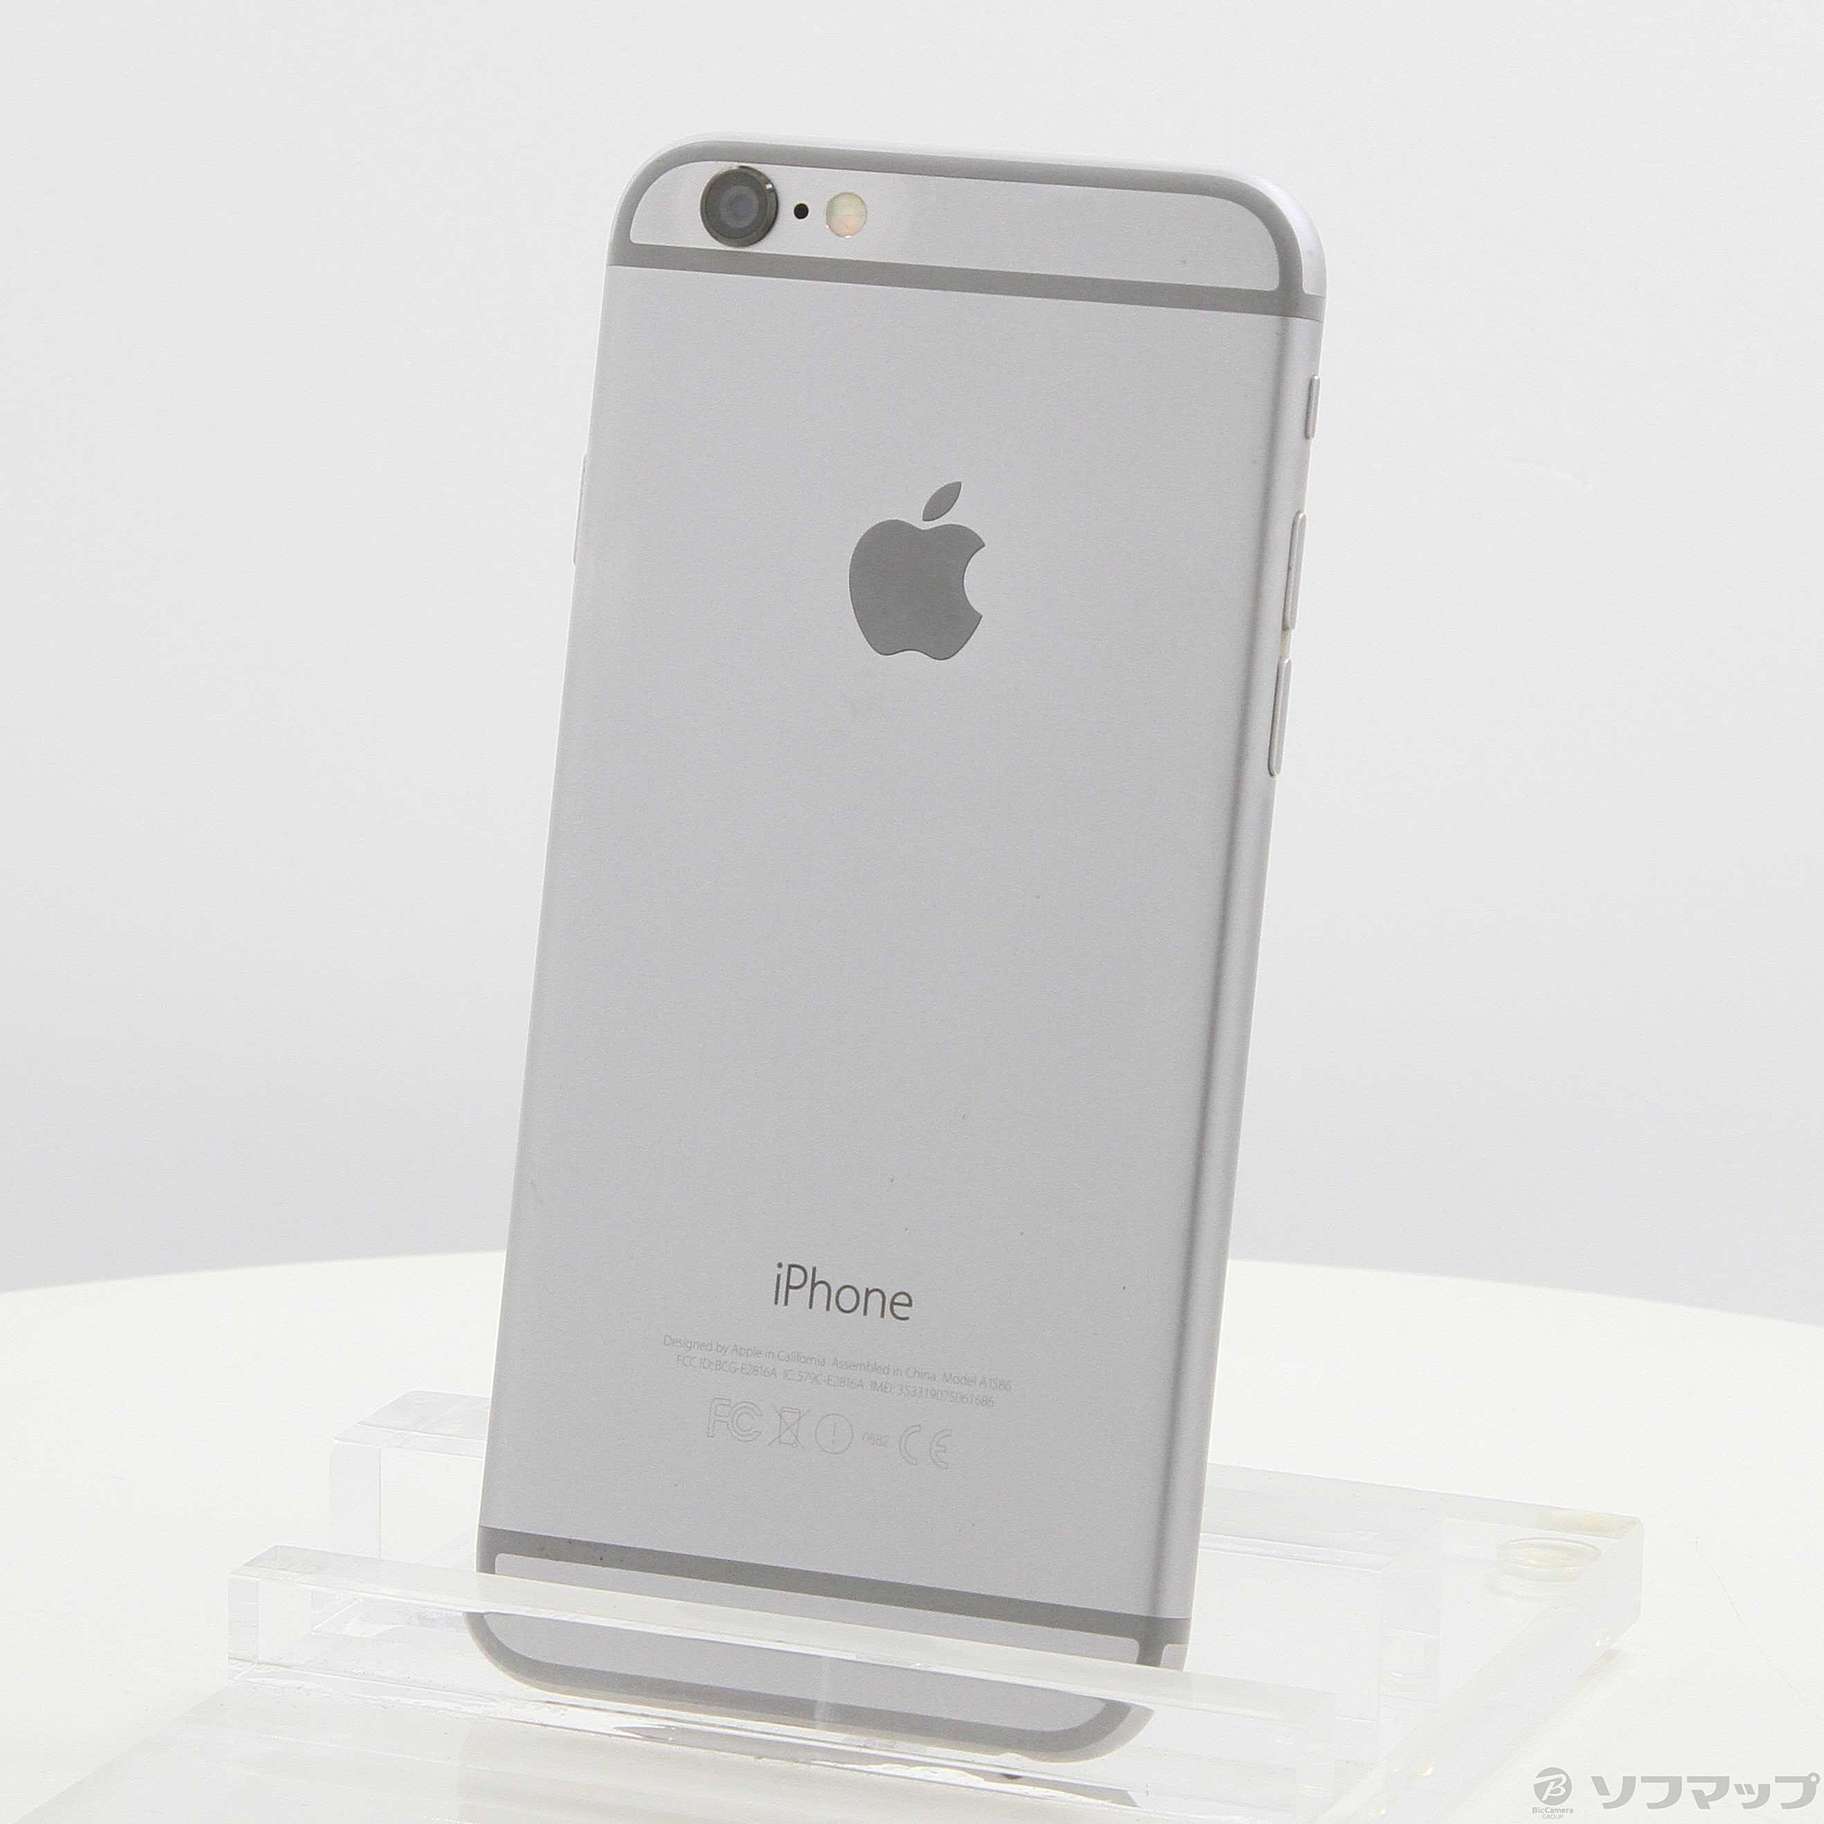 iPhone 6 Space Gray 64 GB Softbank 【正規通販】 - スマートフォン本体